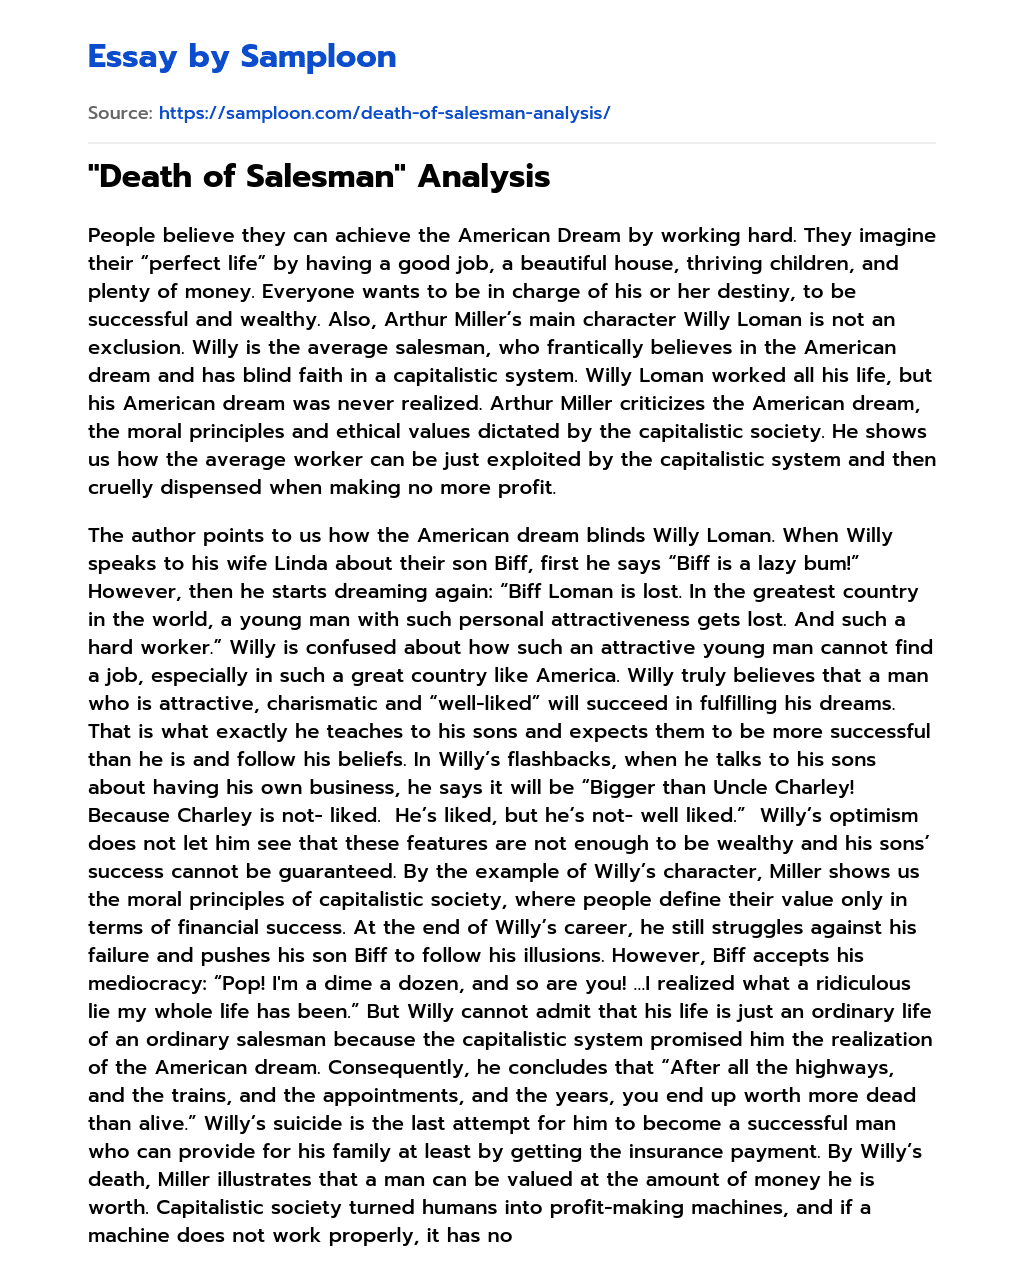 “Death of Salesman” Analysis essay